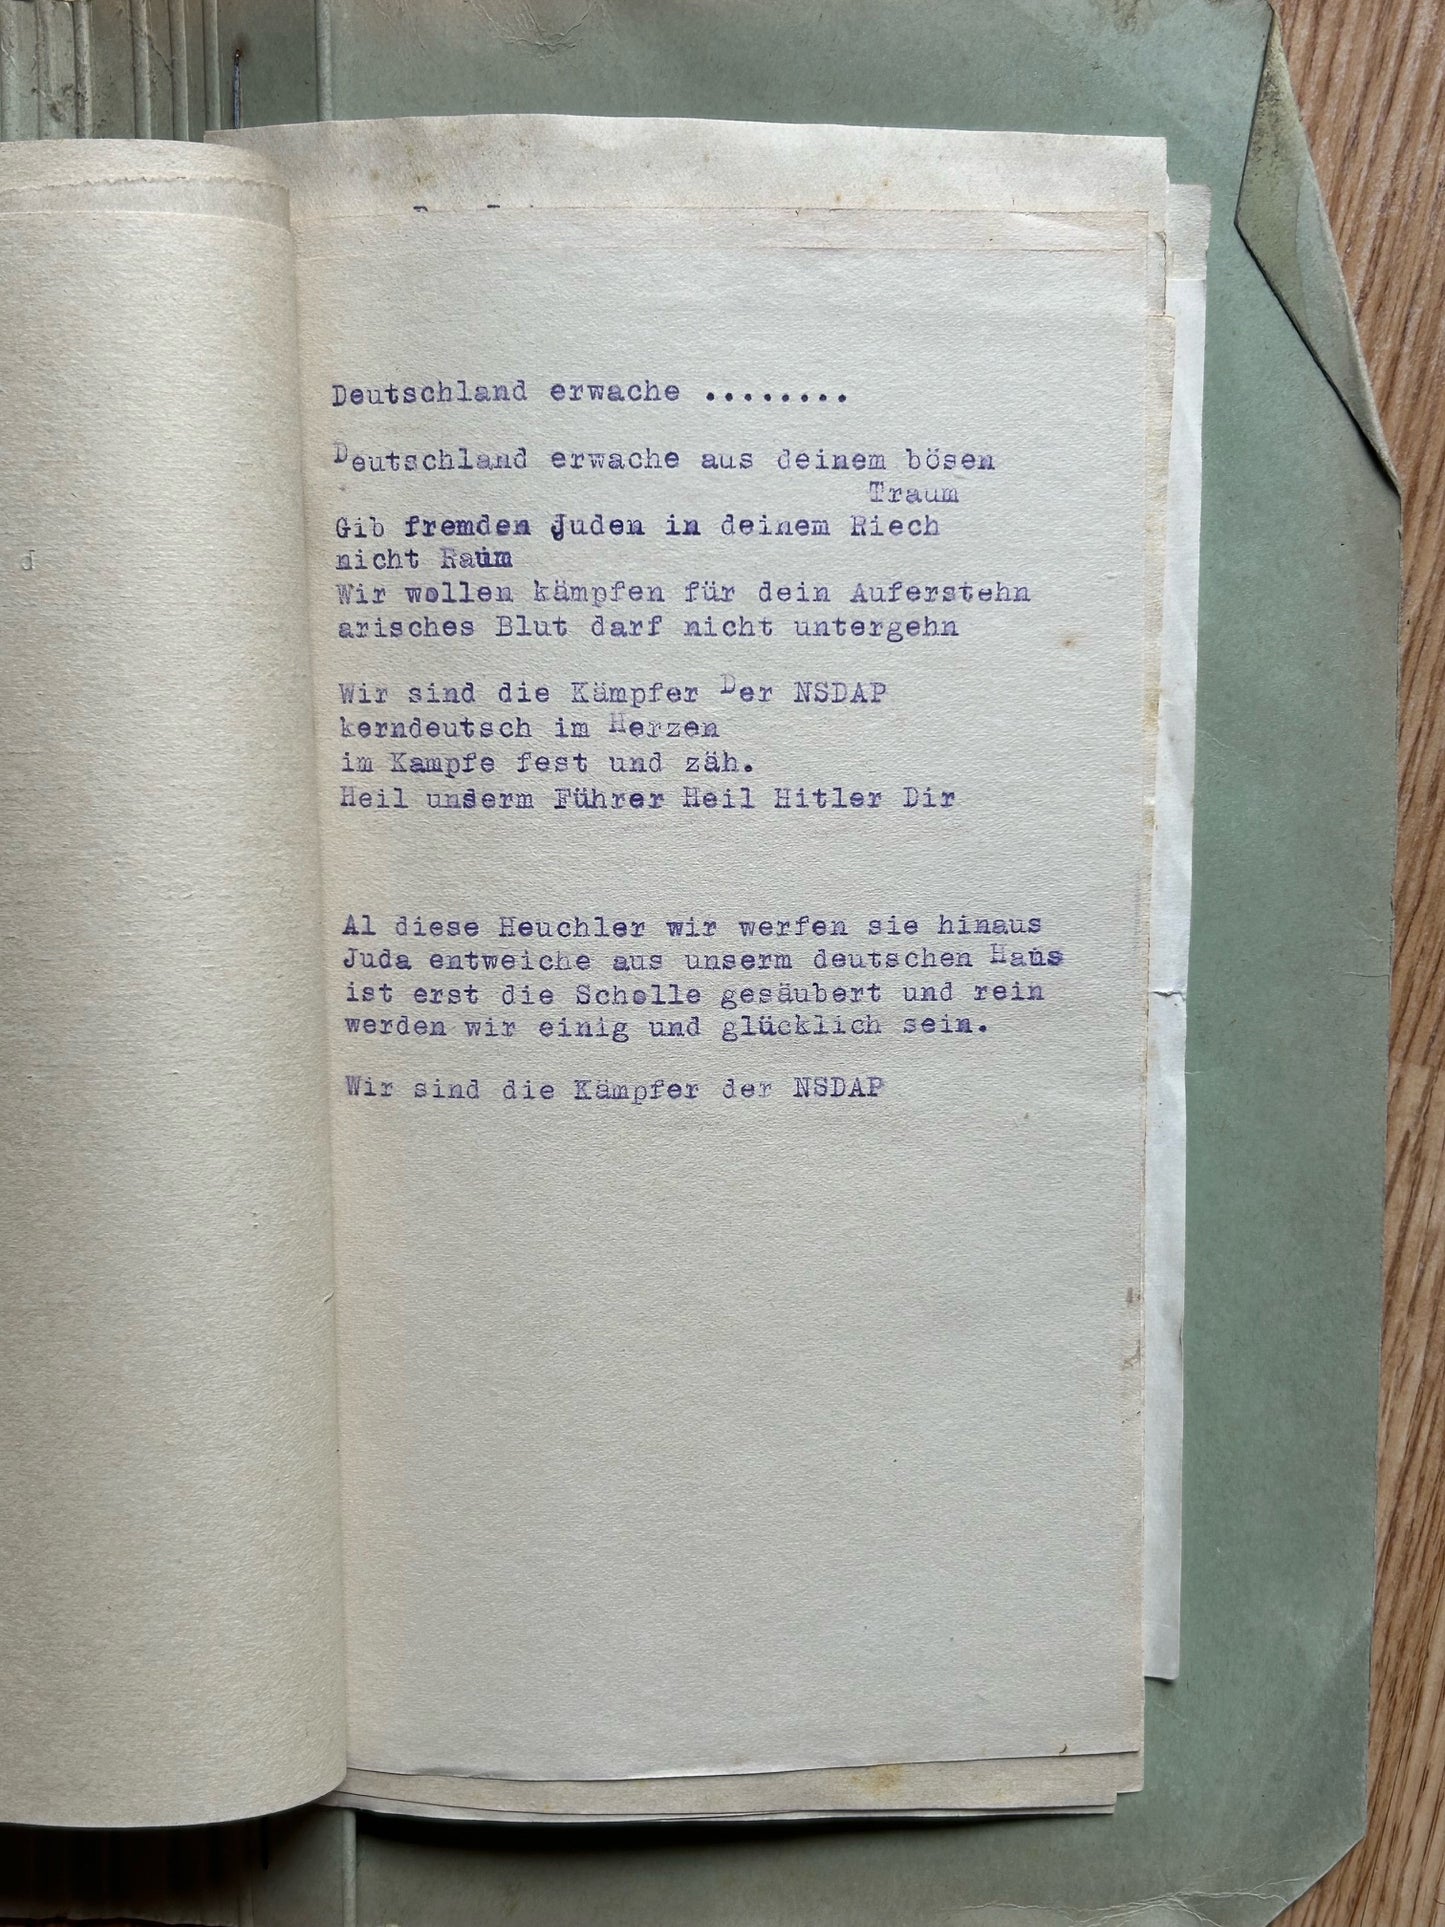 Folder of German Third Reich song sheets - HJ / NSDAP songs